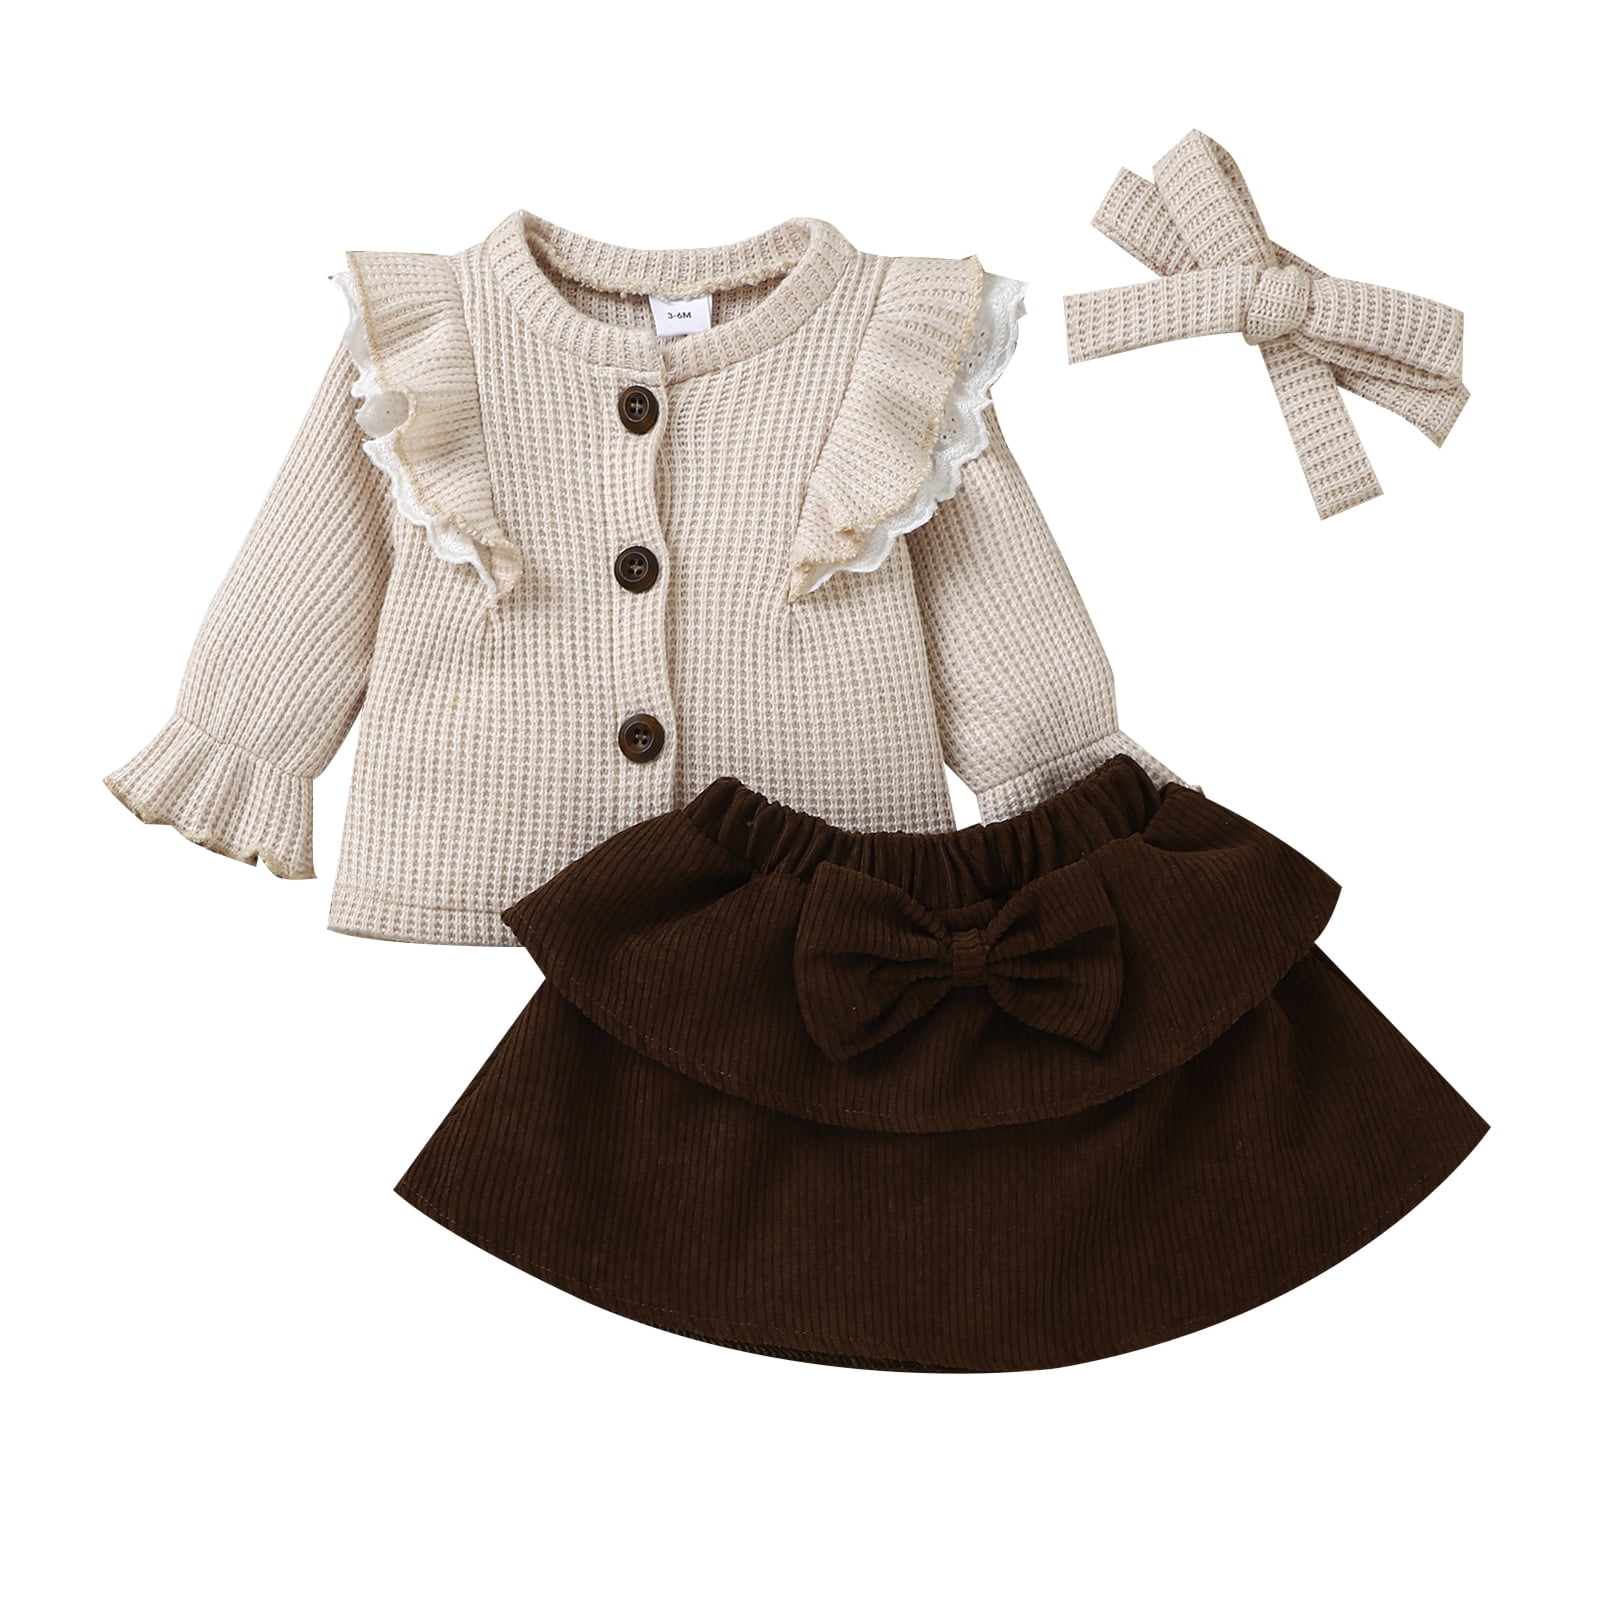 Black+White, 12-18 Months Lefyira Baby Girl Stripe Top Blouse Autumn Ruffle Sleeve Shirt Casual Clothes